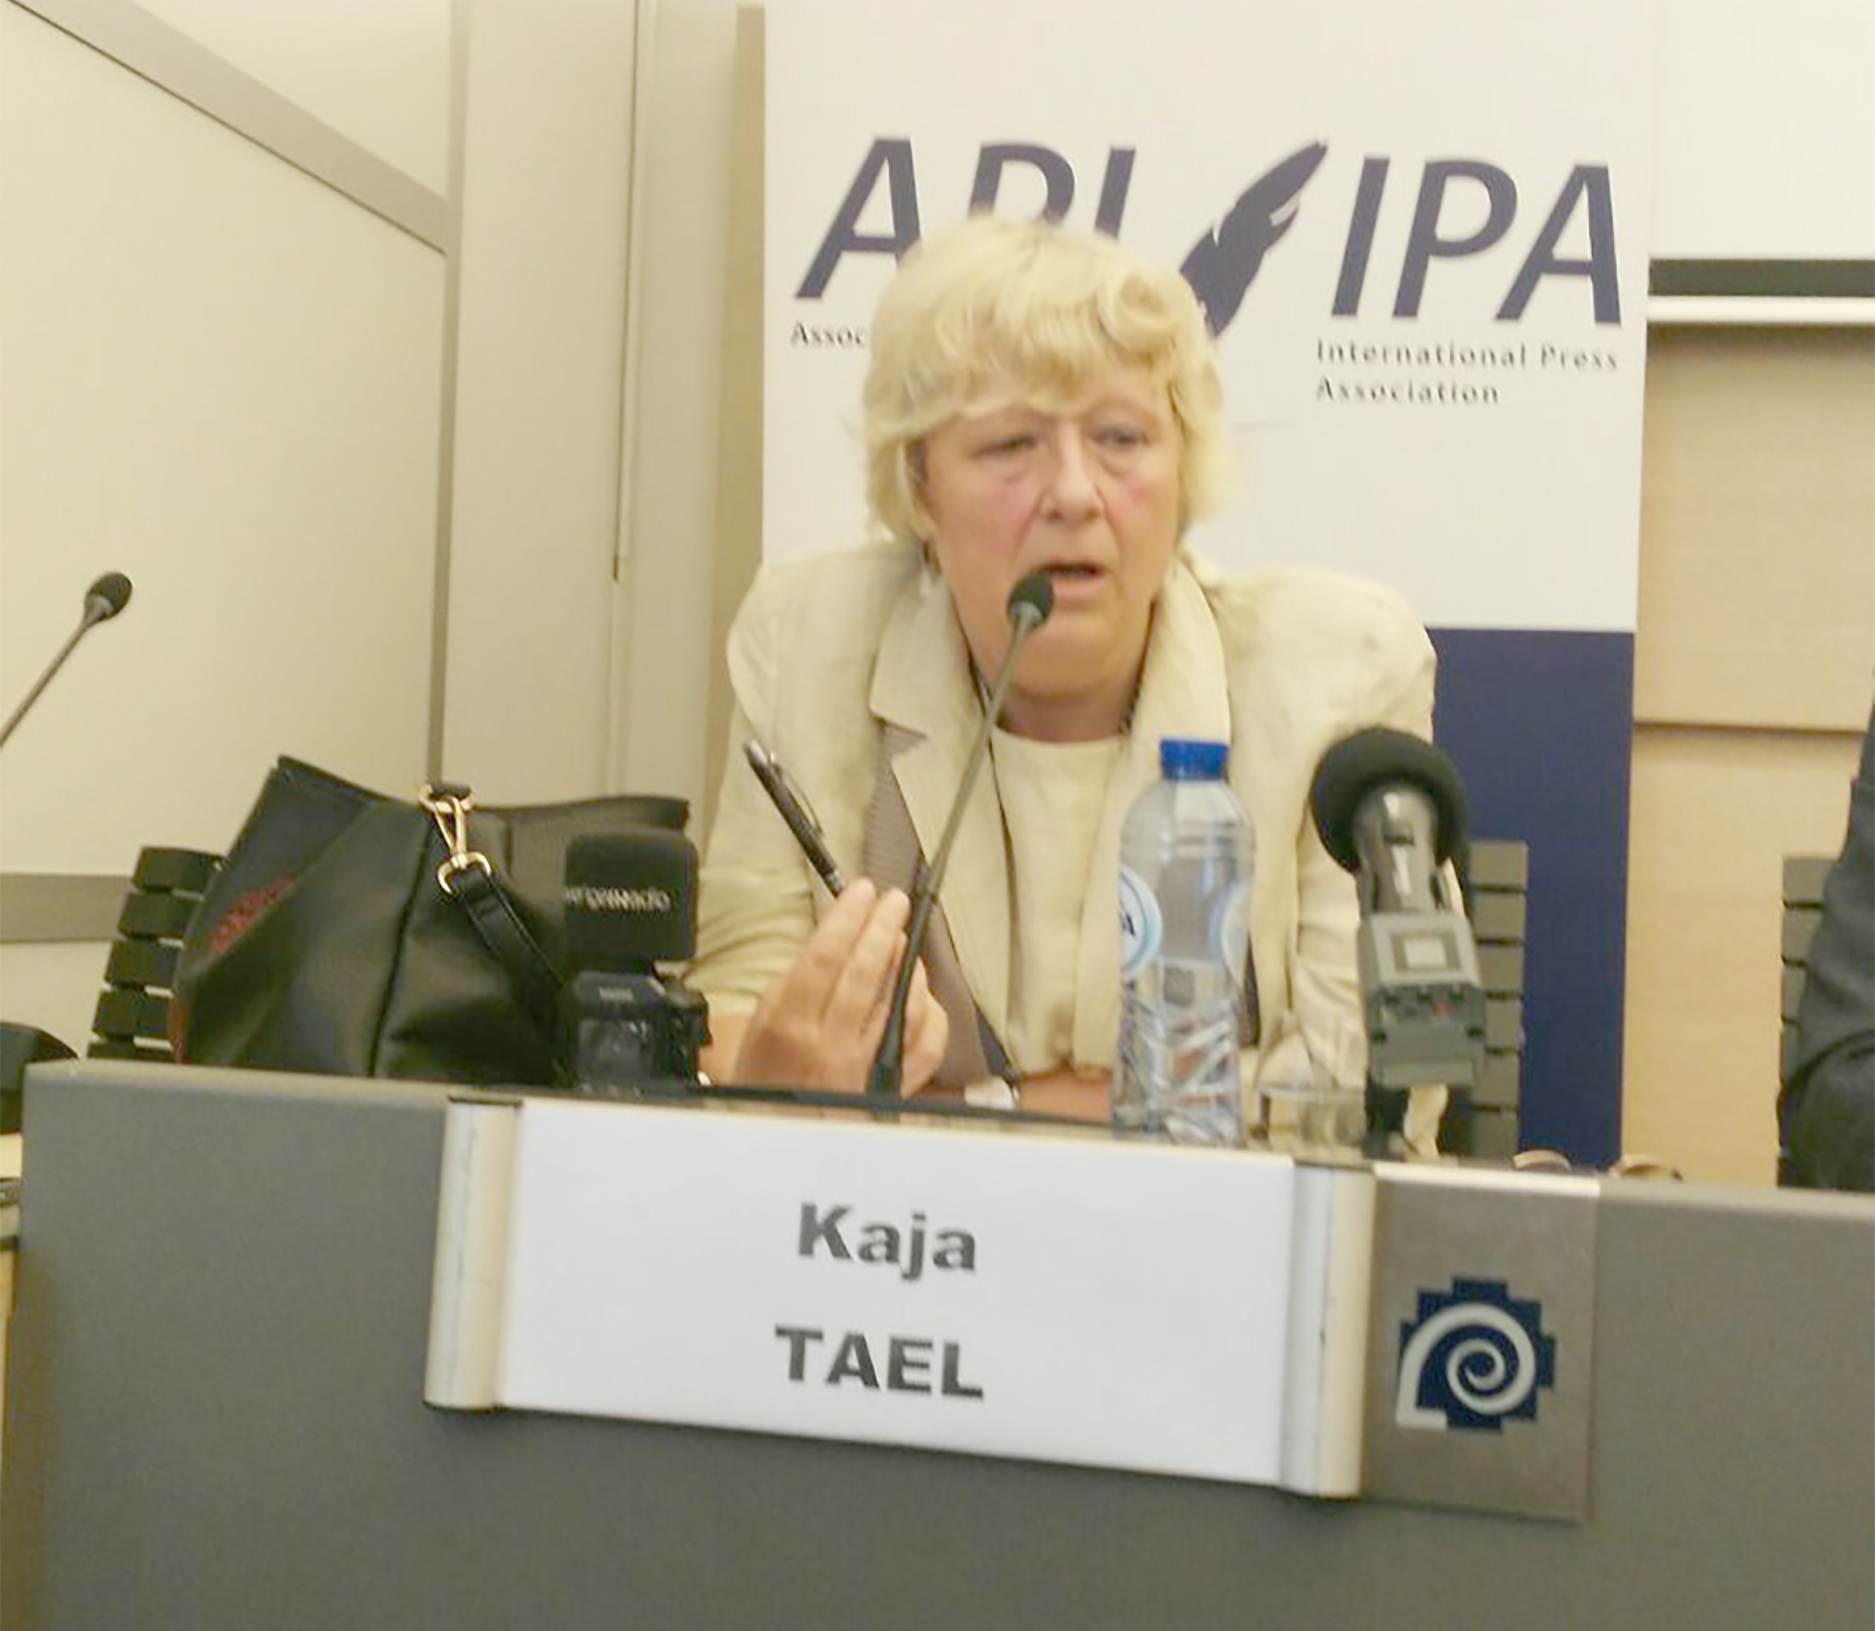 Estonia's ambassador to the EU, Kaja Tael